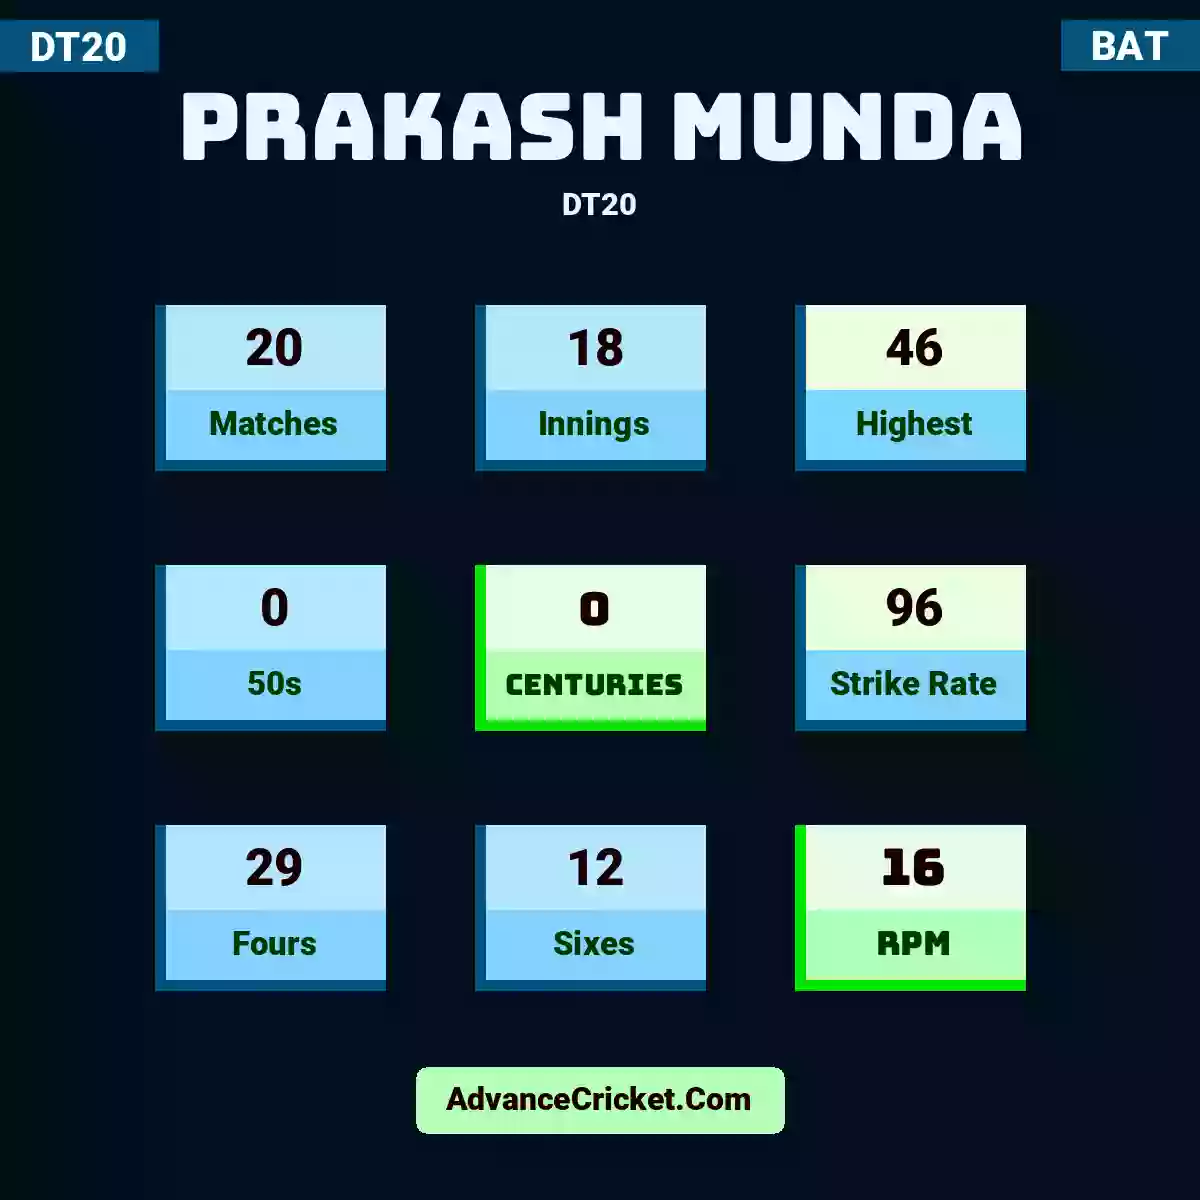 Prakash Munda DT20 , Prakash Munda played 20 matches, scored 46 runs as highest, 0 half-centuries, and 0 centuries, with a strike rate of 96. P.Munda hit 29 fours and 12 sixes, with an RPM of 16.